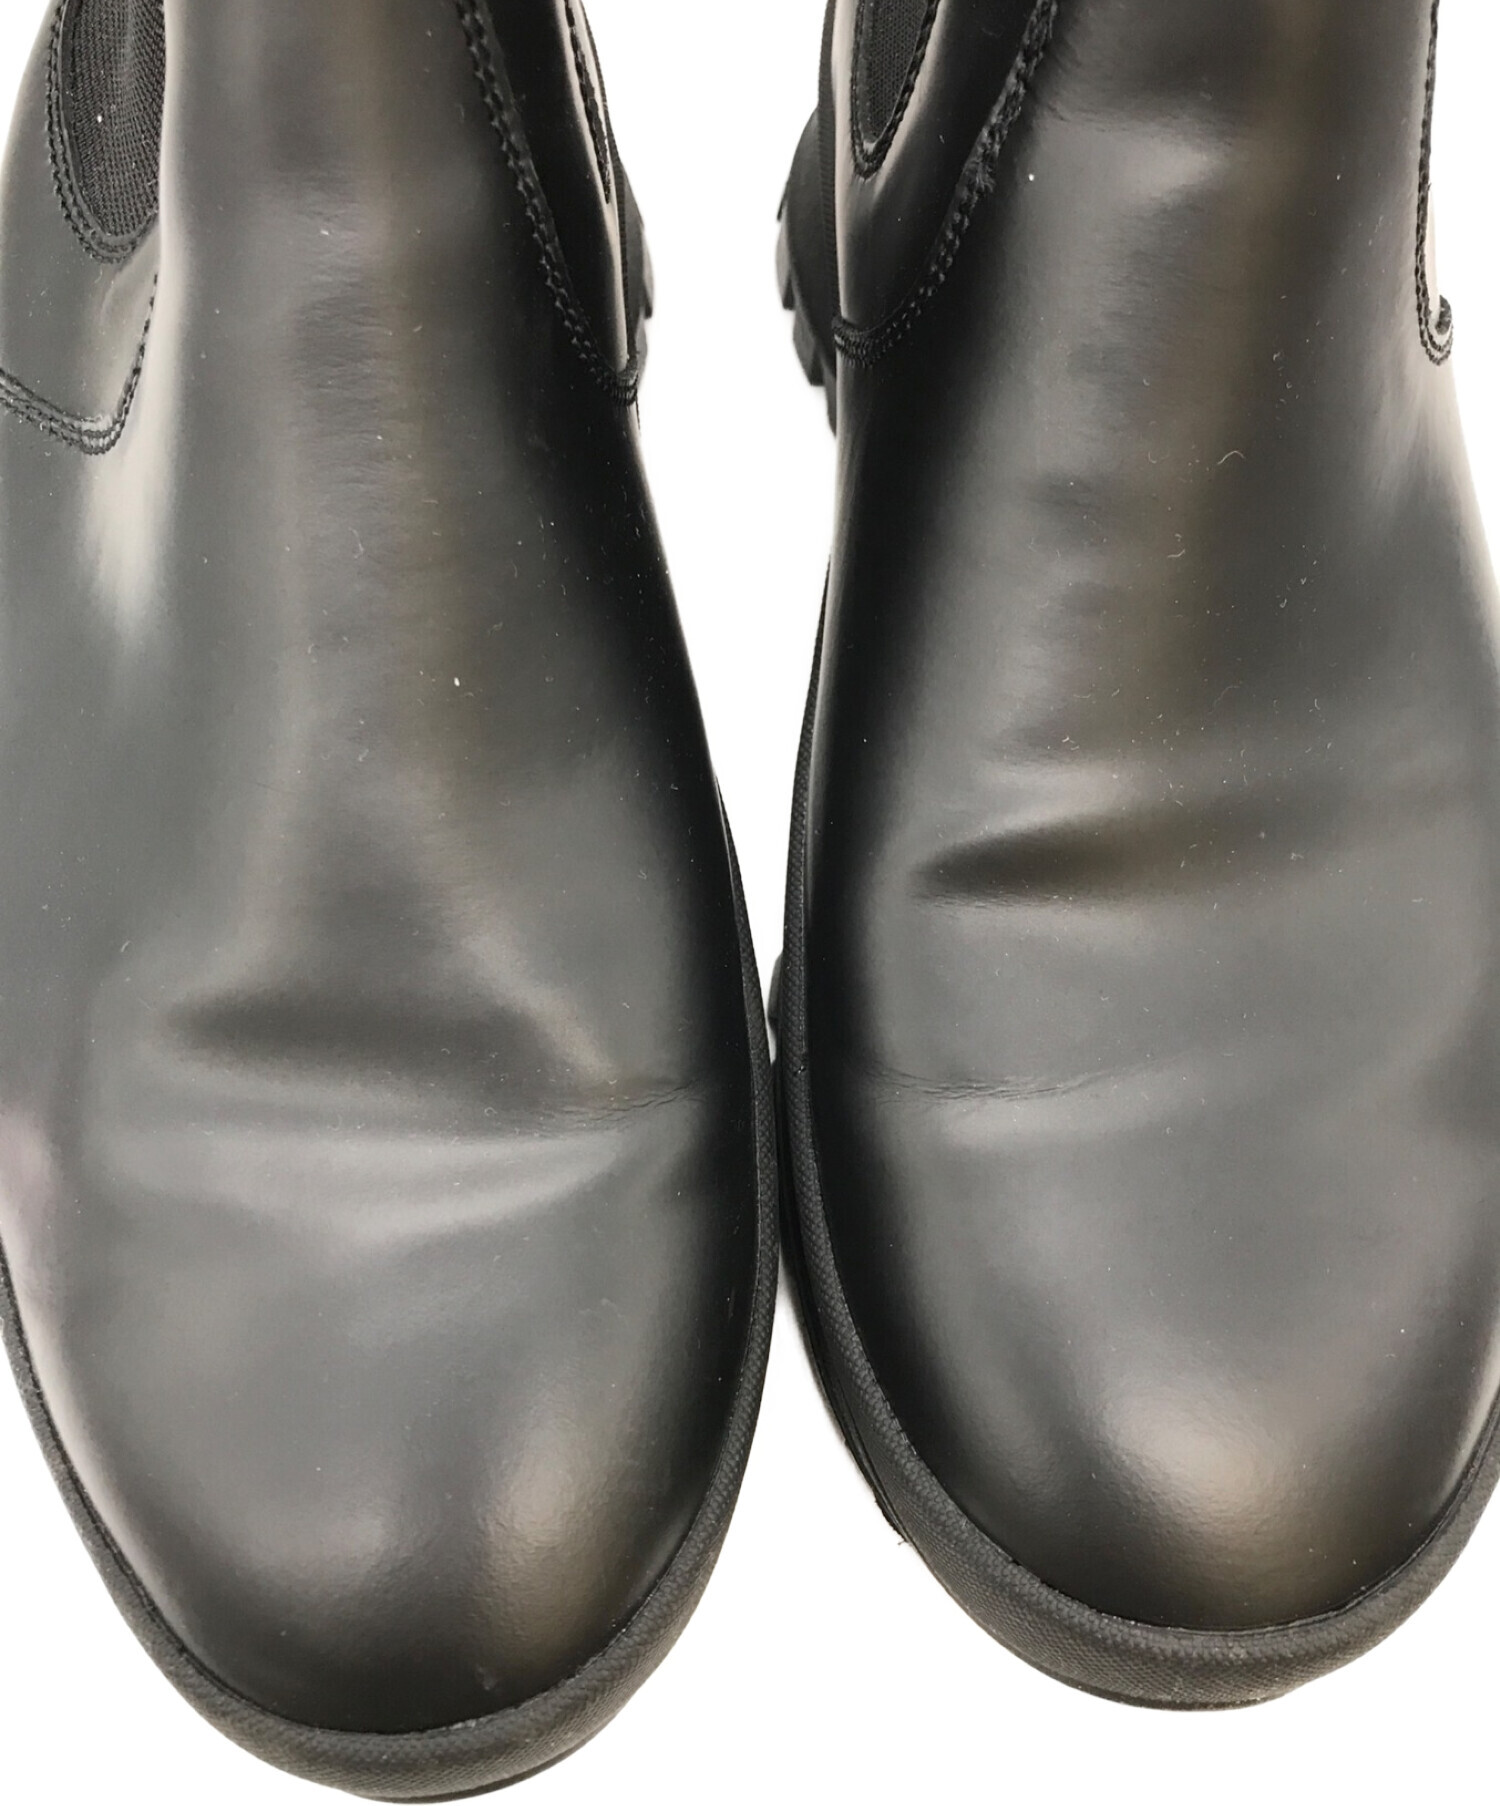 ZARA (ザラ) Vibramレザーチェルシーアンクルブーツ ブラック サイズ:26.0cm